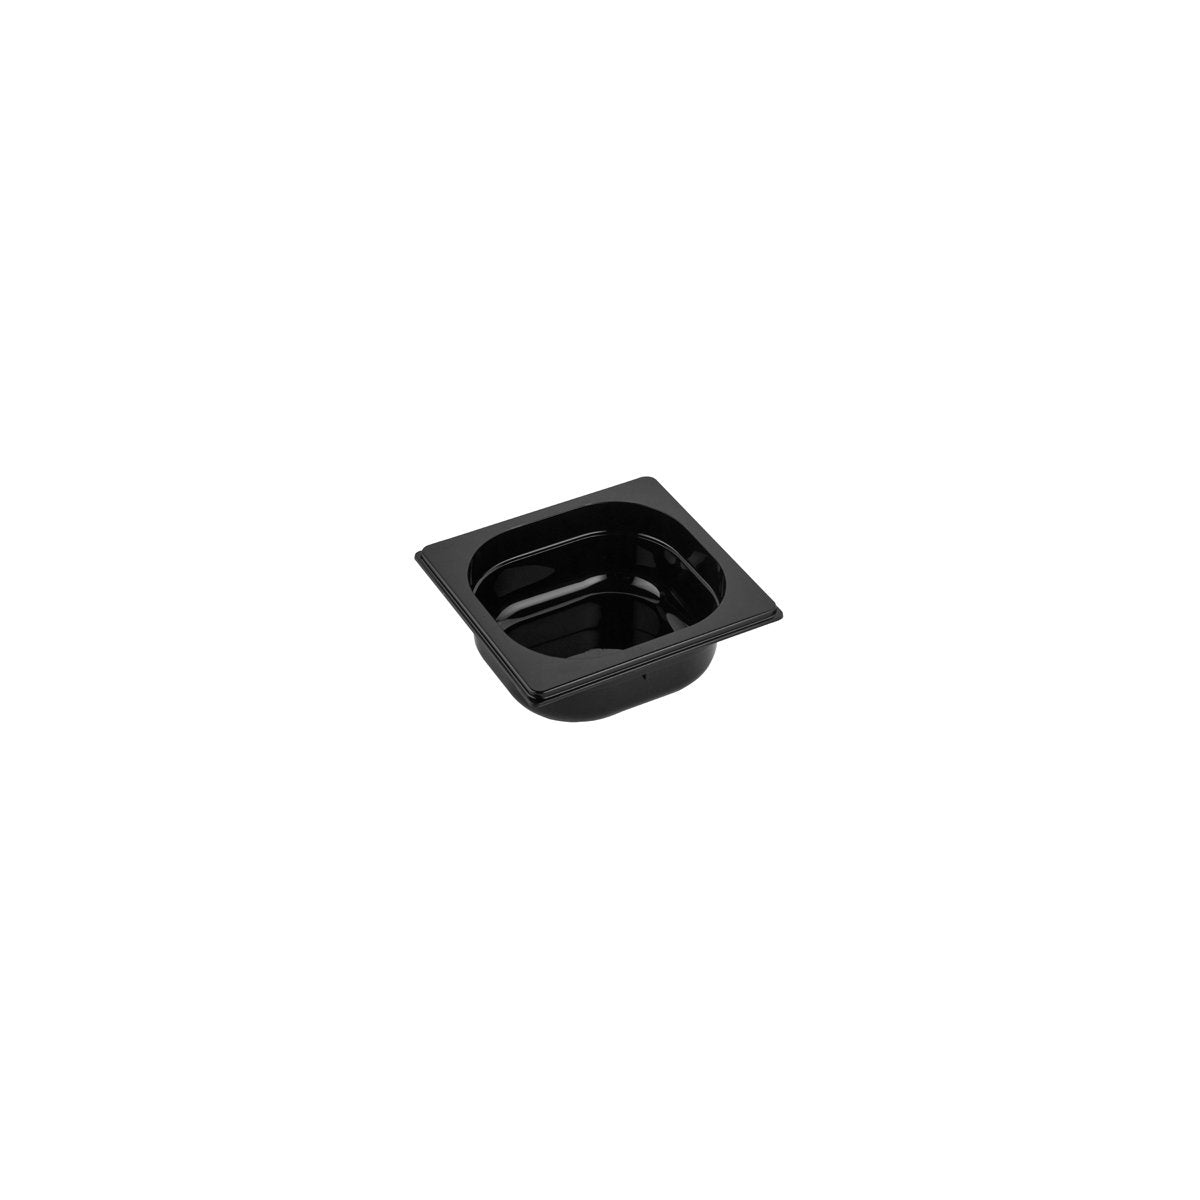 PC-16065BK Inox Macel Gastronorm Pan Polycarbonate Black 1/6 Size 65mm Tomkin Australia Hospitality Supplies